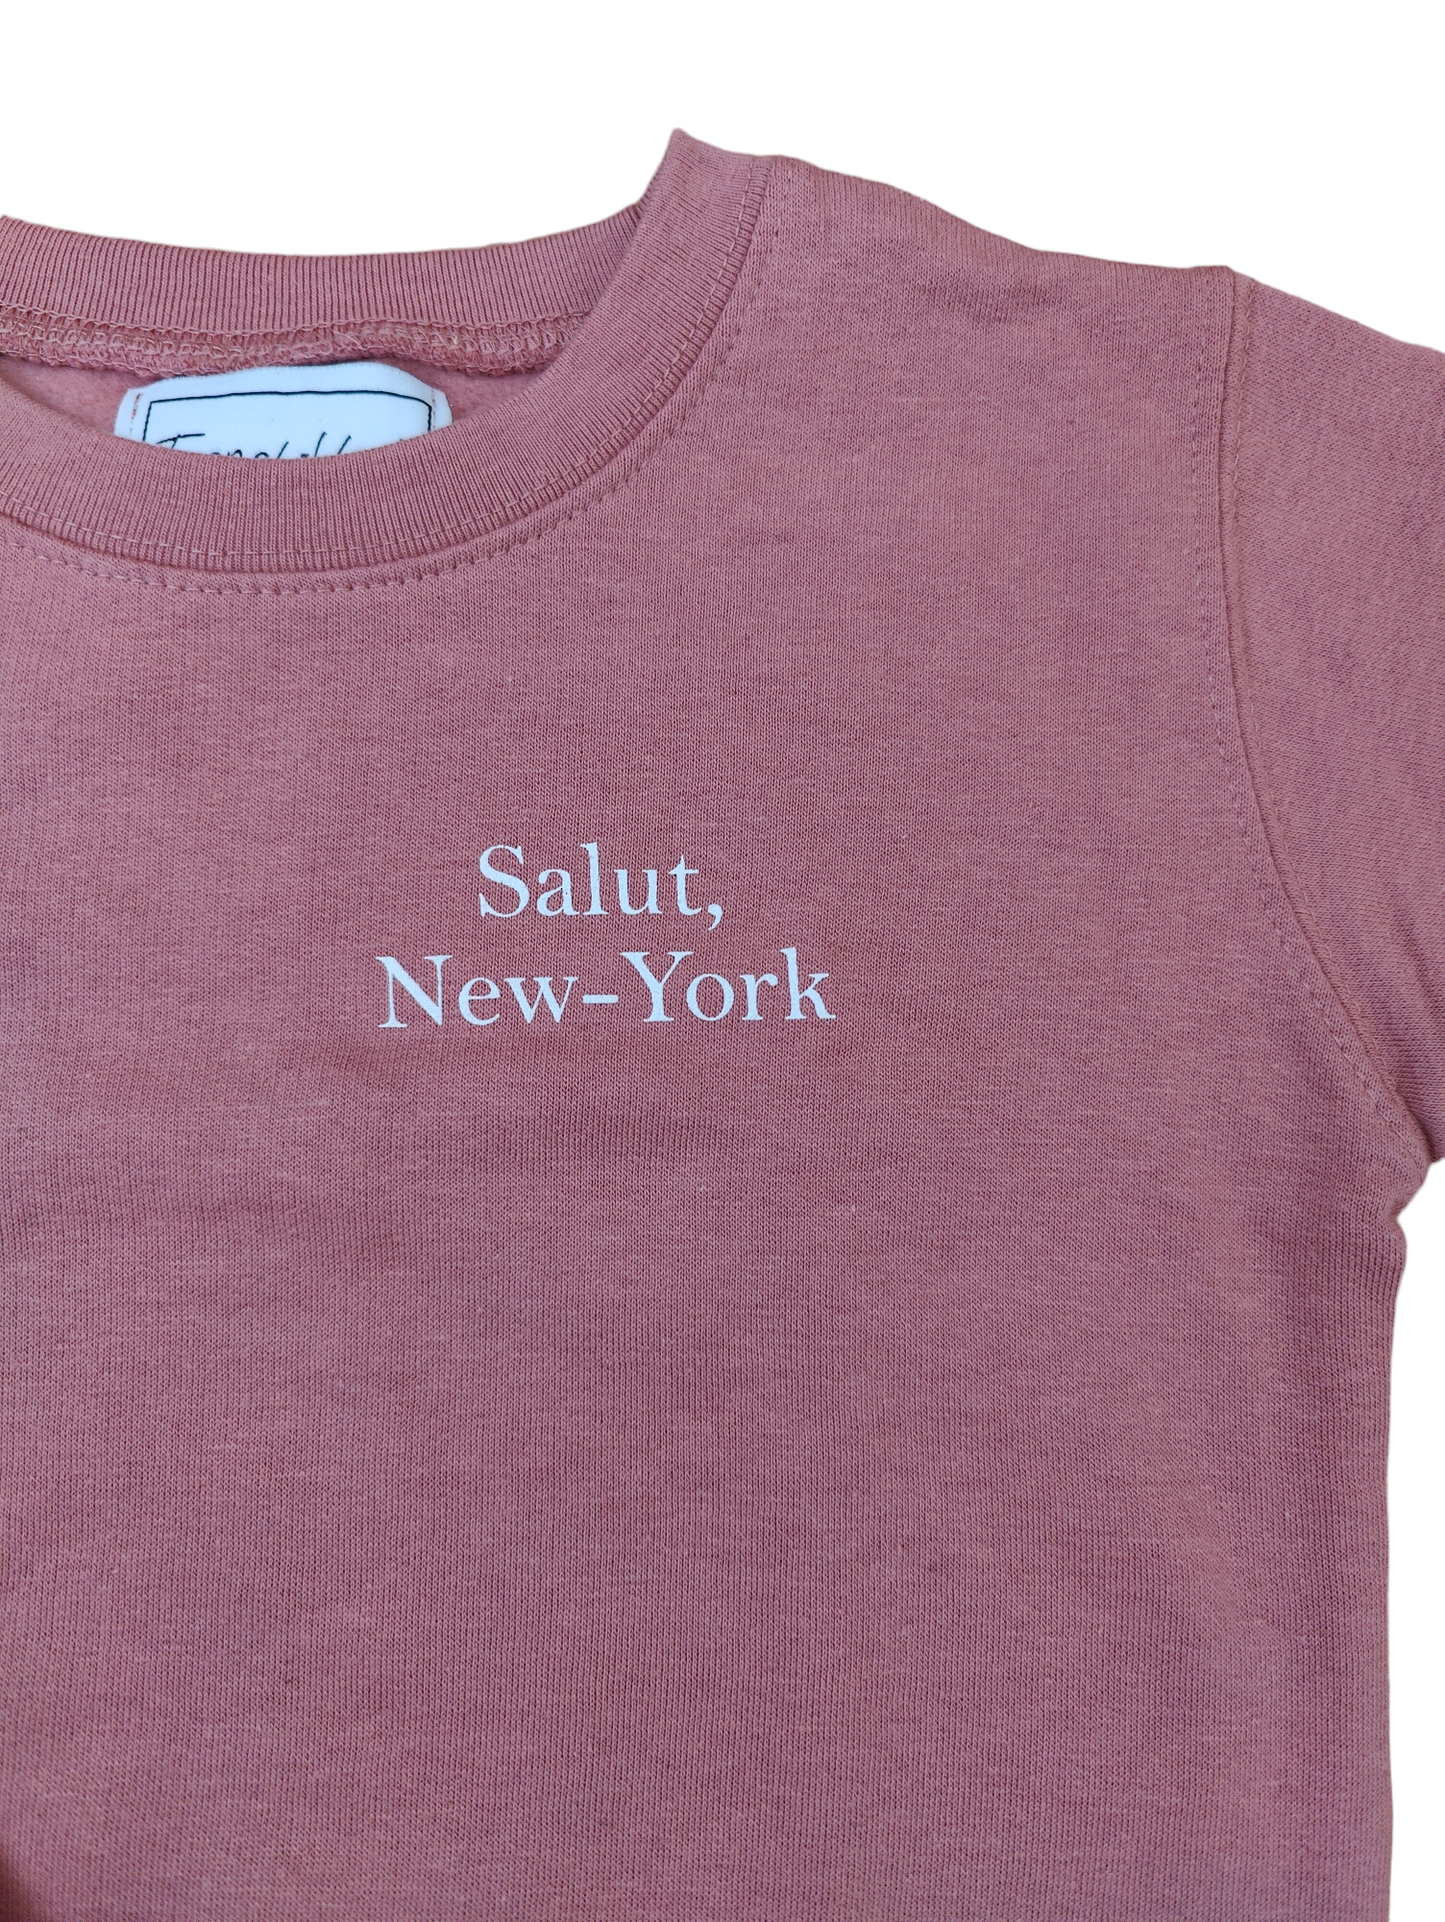 Kids sweater Salut New York